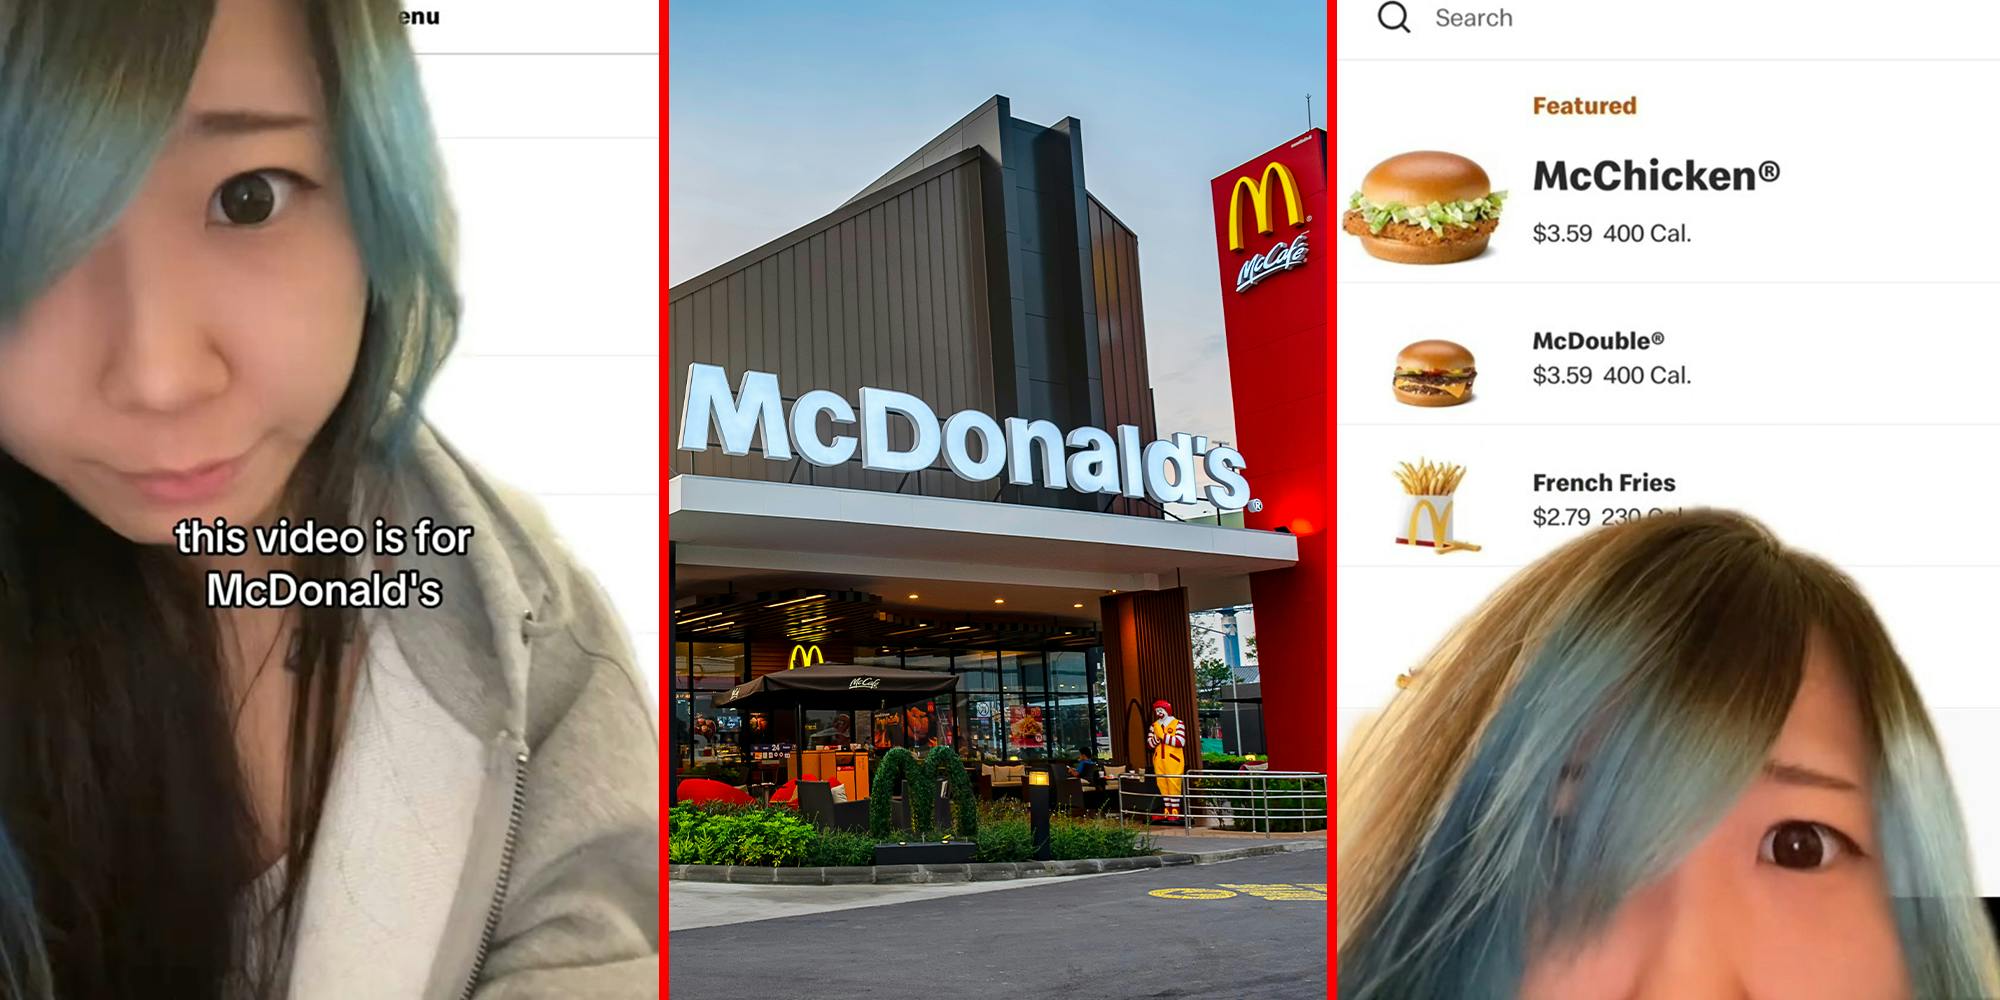 McDonald's customer questions 'dollar menu' after seeing $3.59 McChicken